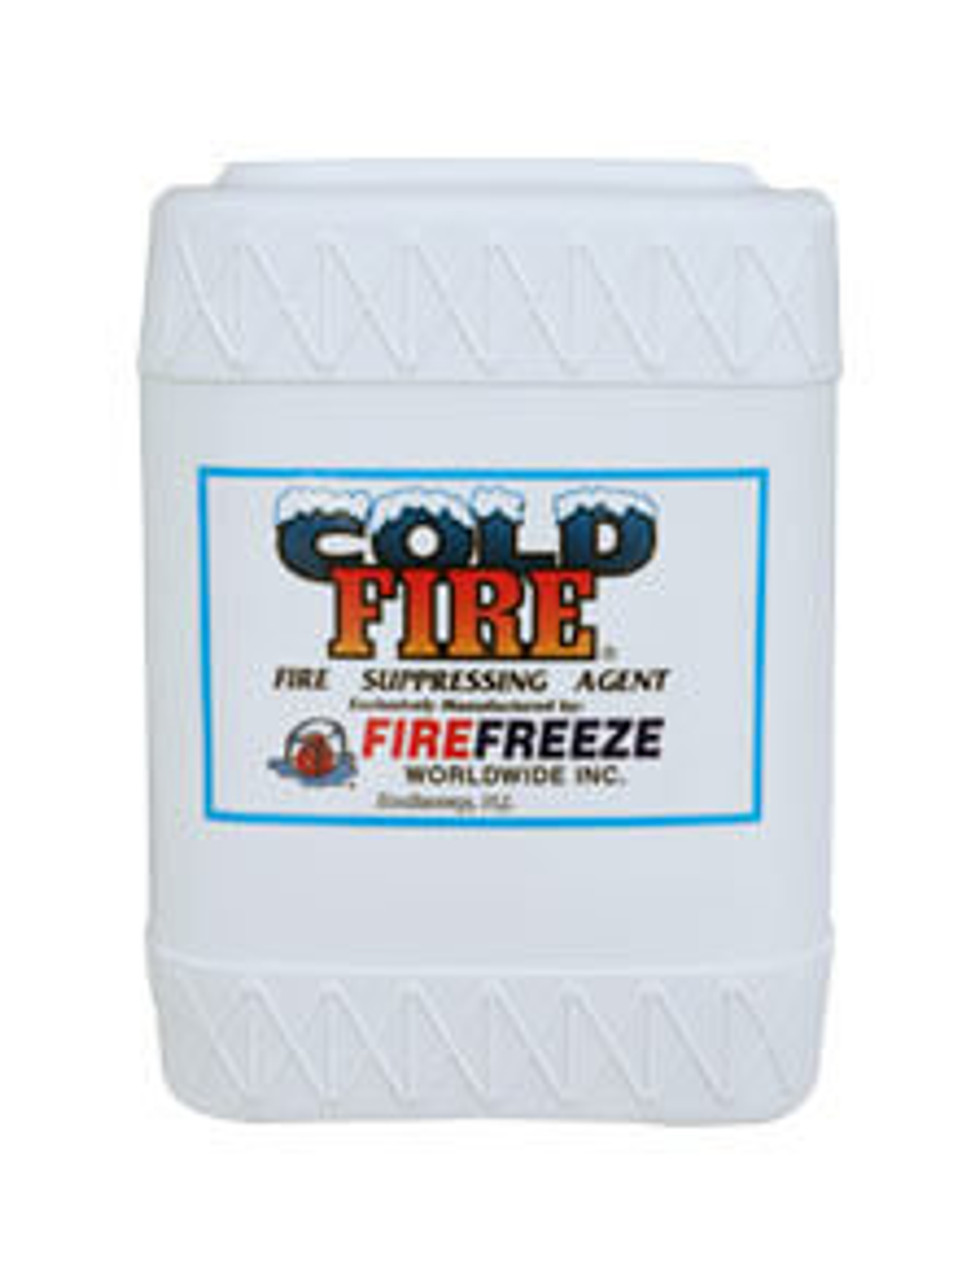 Fire Block Cold Fire Retardant 32 Ounce Pump Spray Bottle by Firefreeze